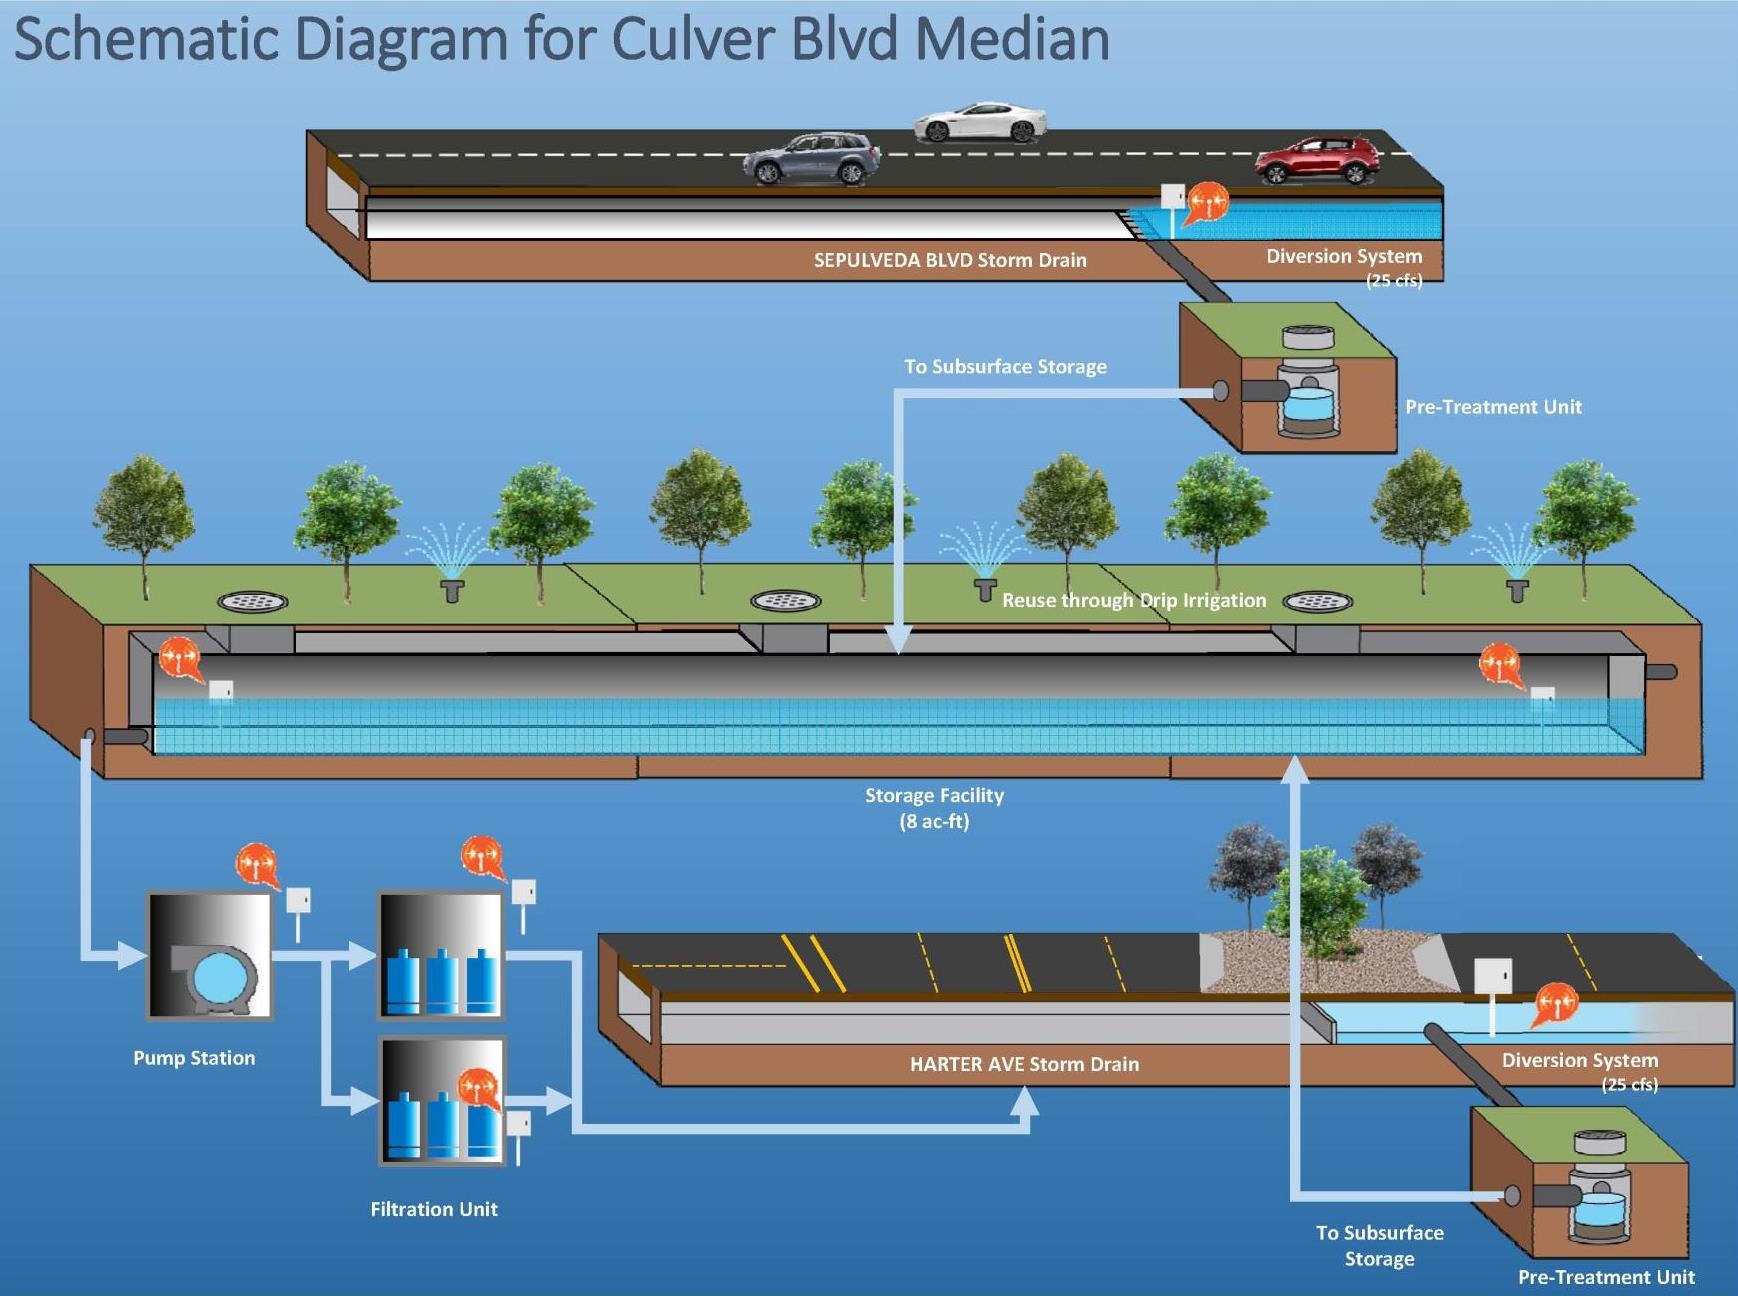 Schematic diagram for Culver Blvd median